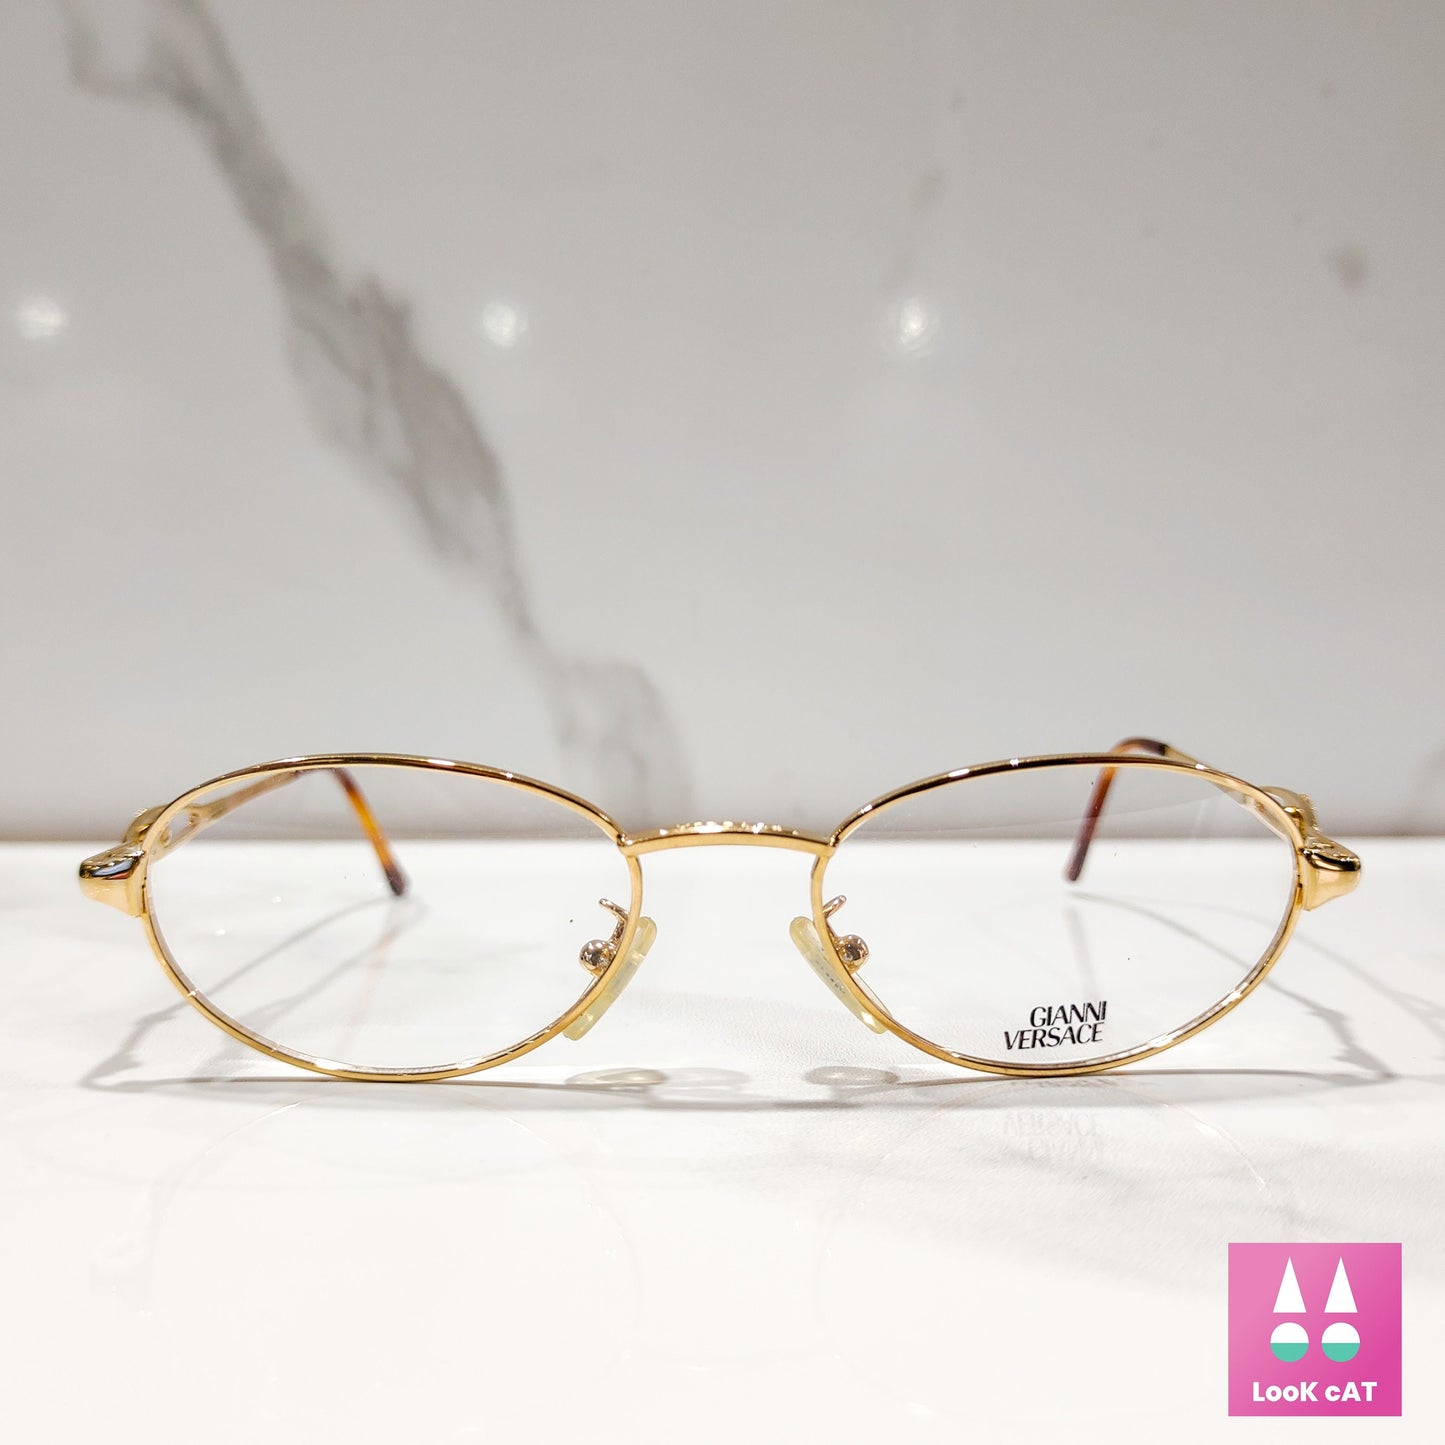 Versace G 83 occhiali da vista vintage Montatura color oro occhiali gafas anni '90 y2k NOS